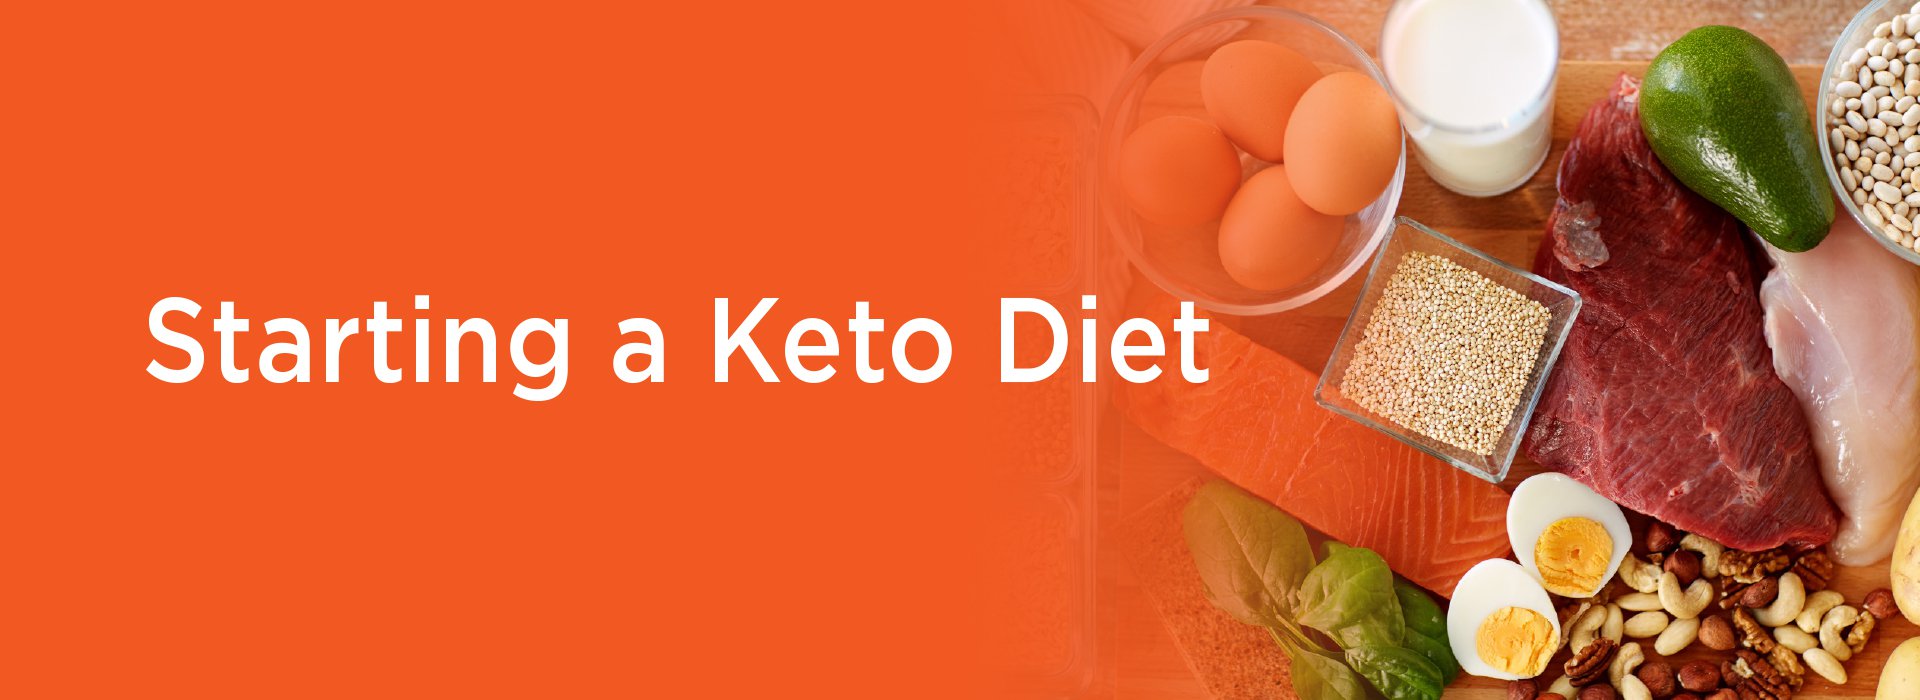 New Image International:Starting a keto diet